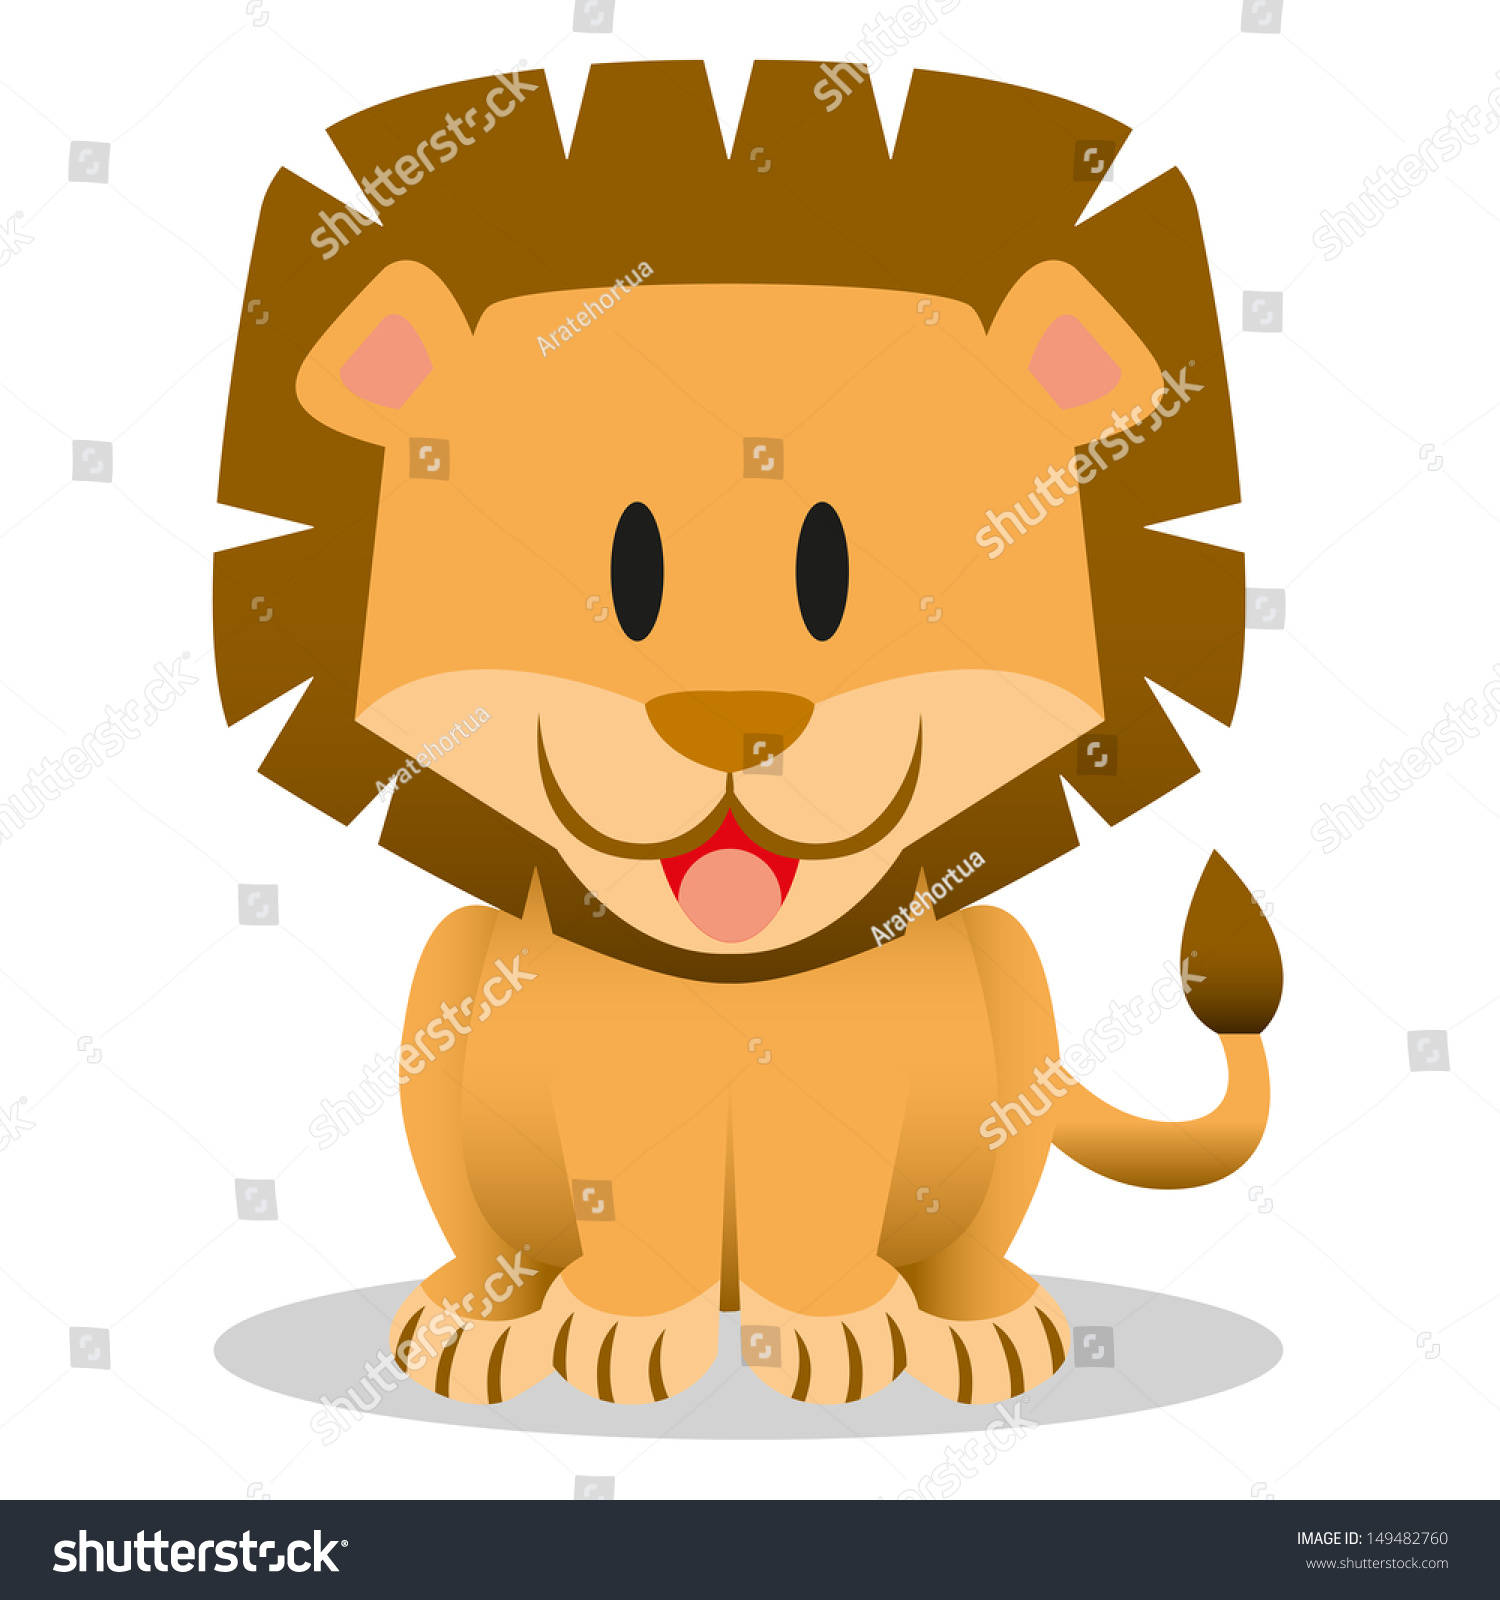 A Vector Cute Cartoon Baby Lion Icon - 149482760 : Shutterstock